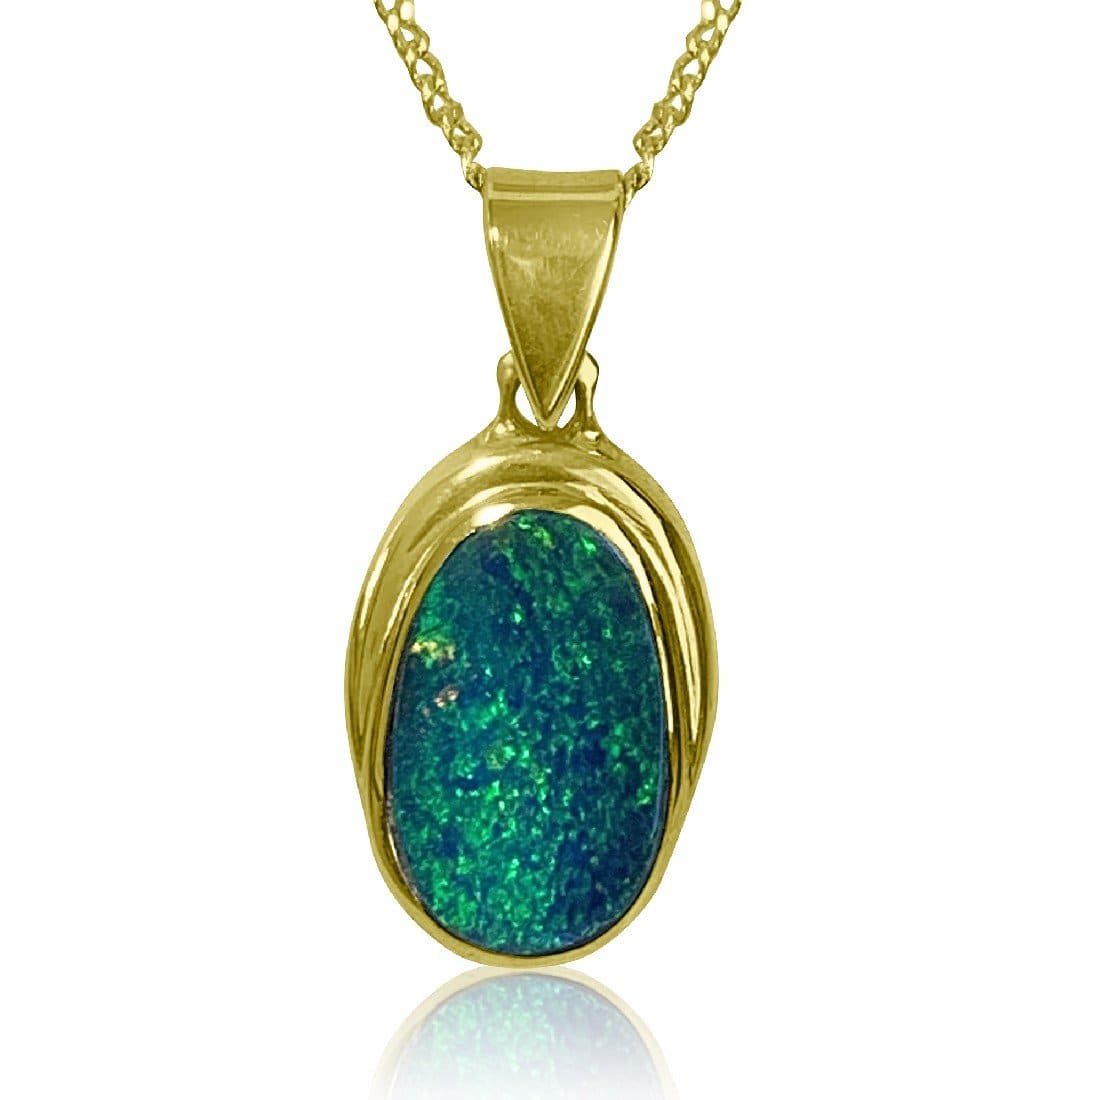 18kt Yellow Gold pendant with Black Opal - Masterpiece Jewellery Opal & Gems Sydney Australia | Online Shop